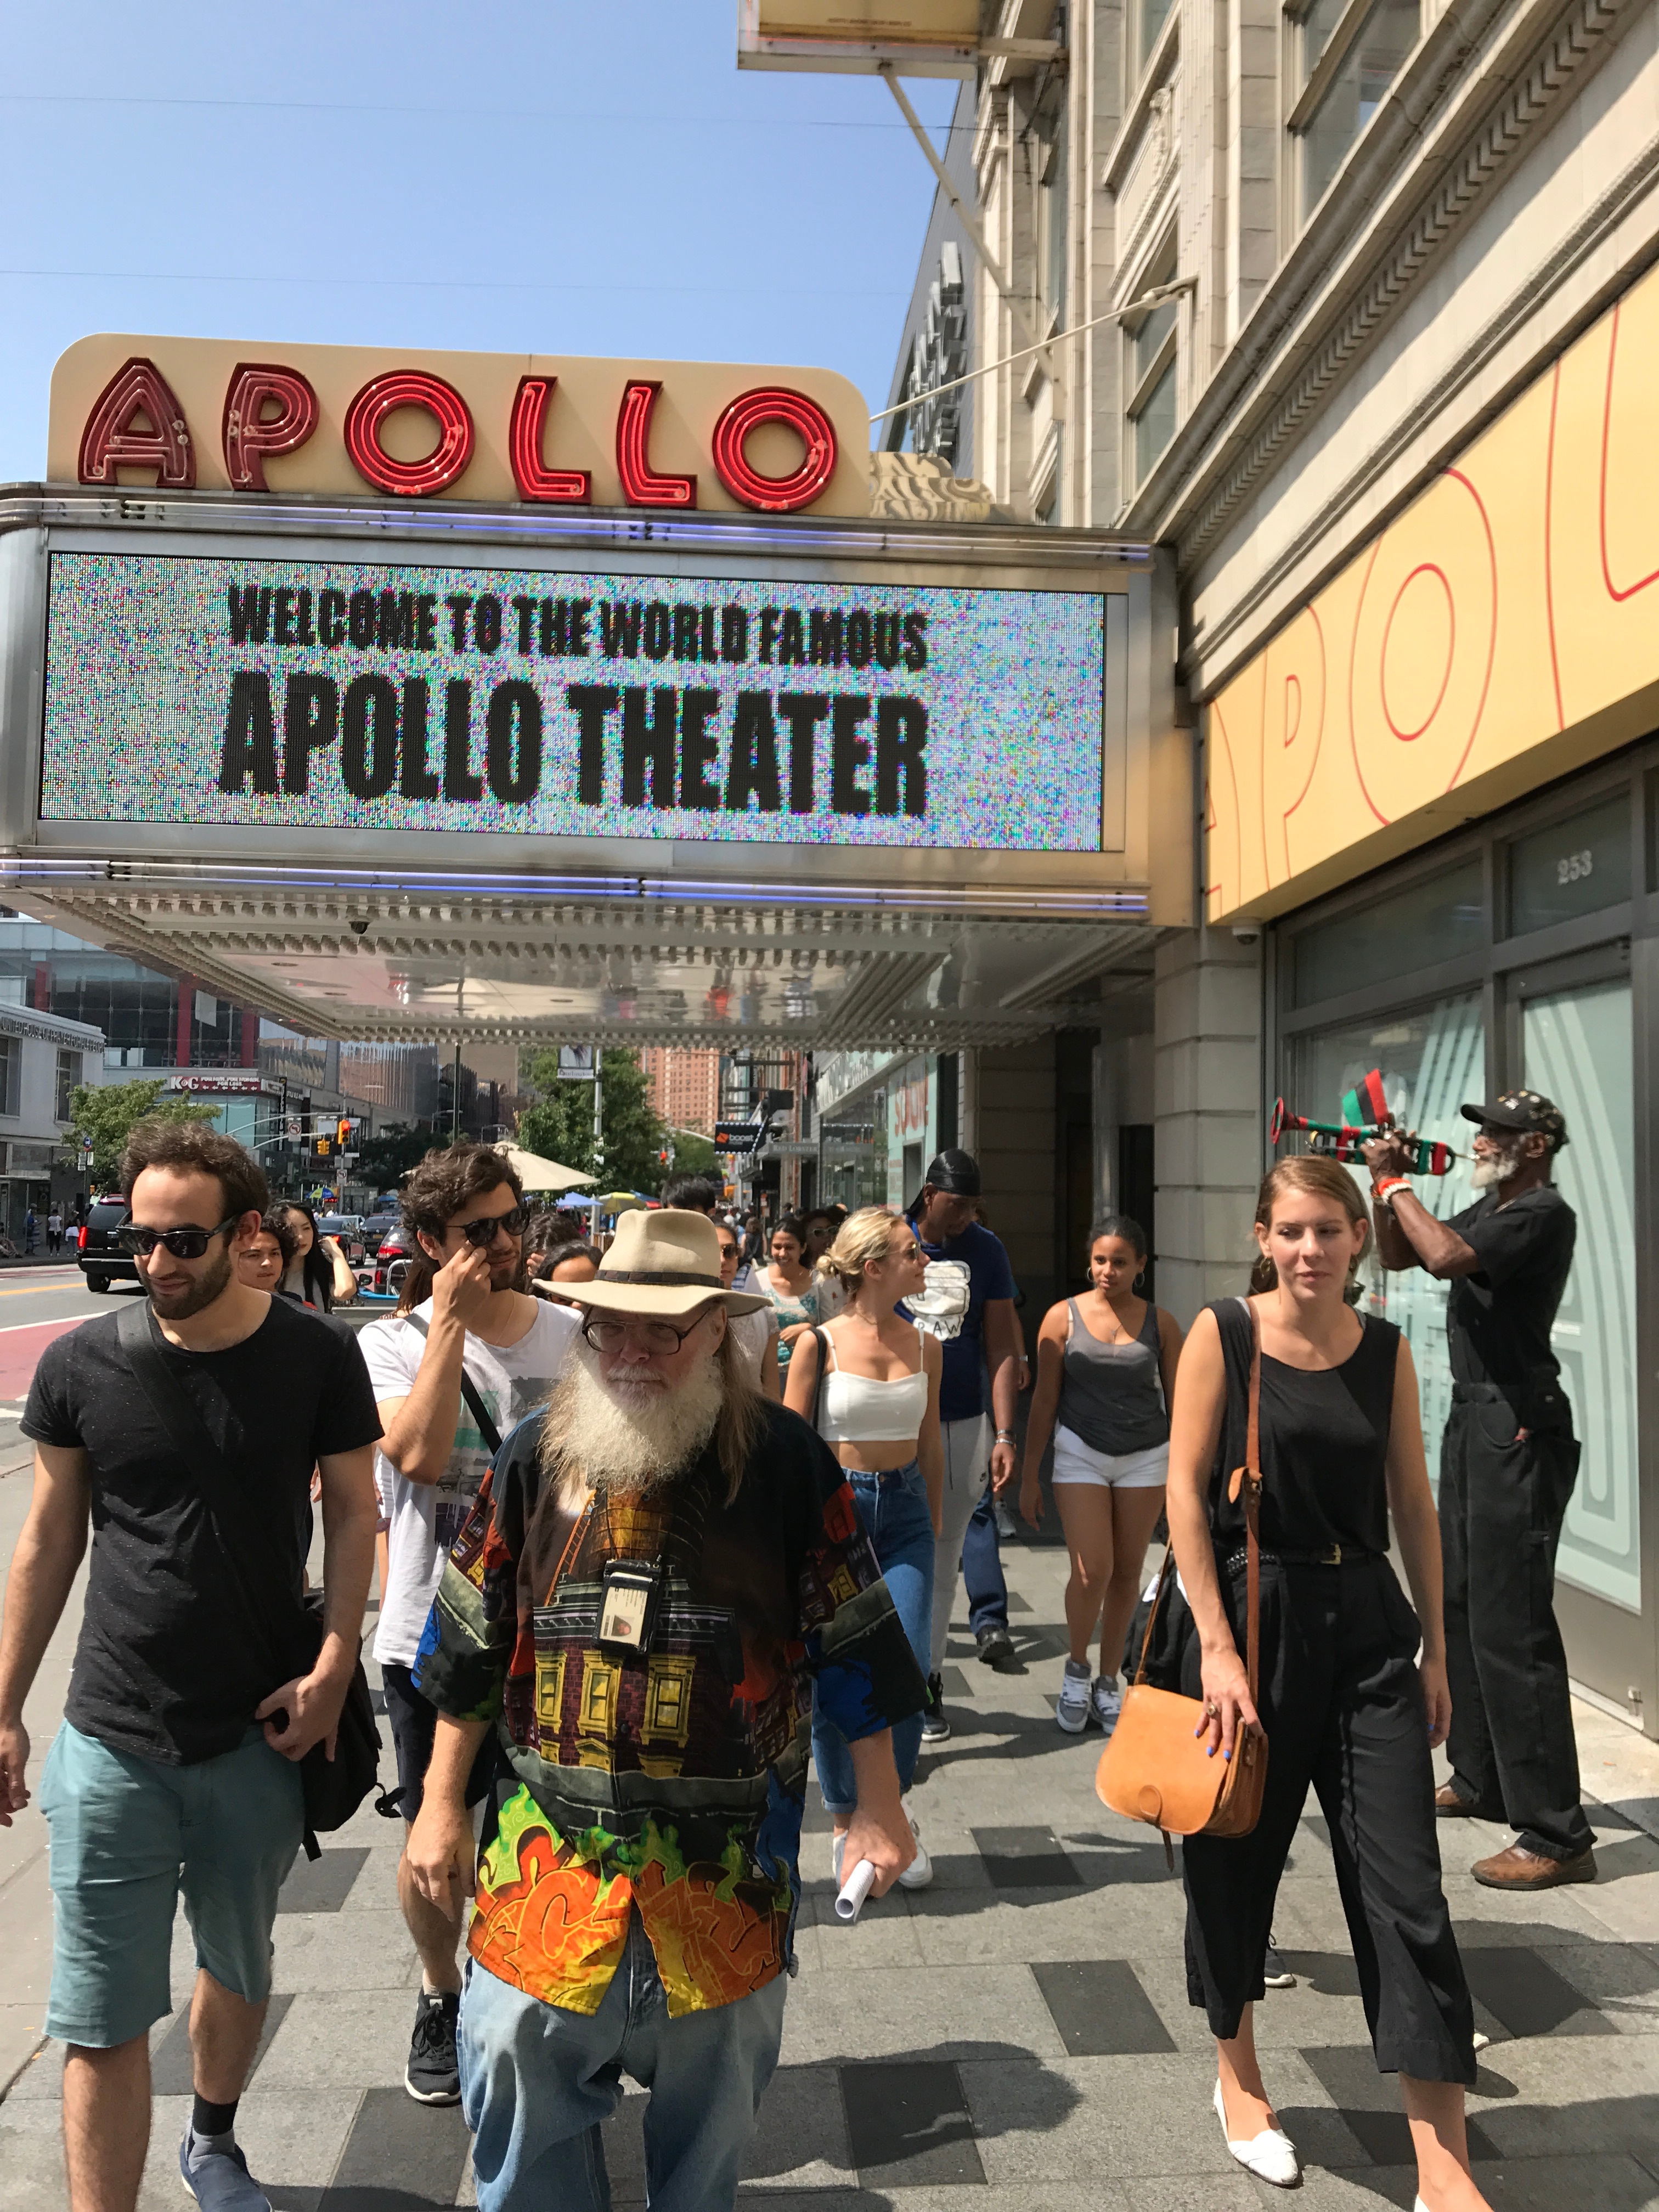 Outside the historic Apollo Theater